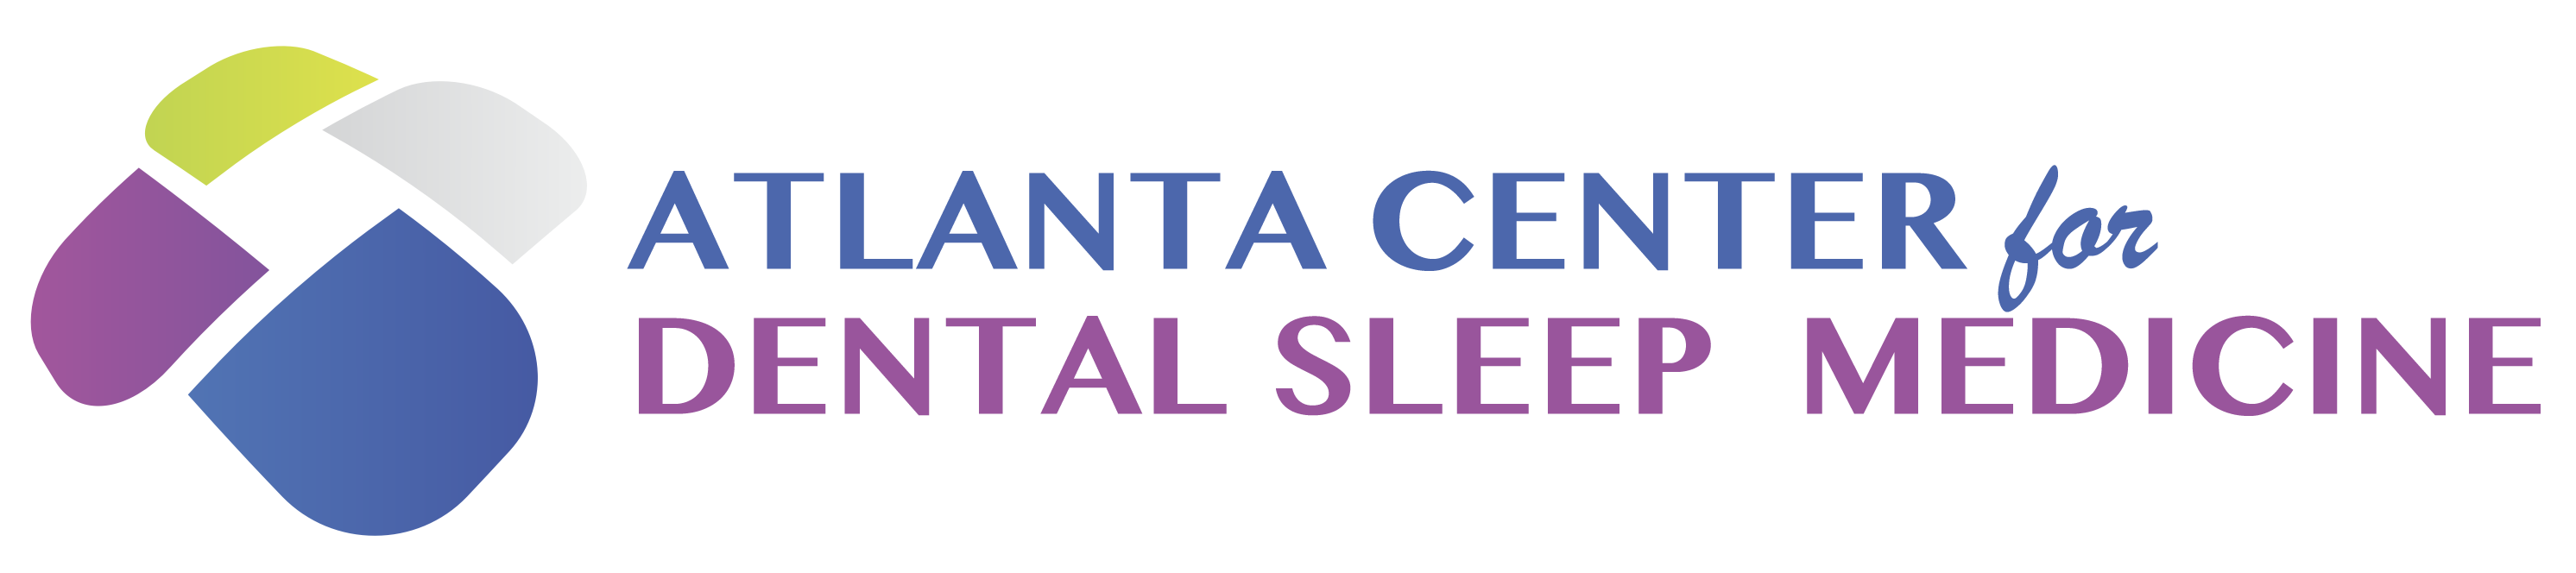 Atlanta Center for Dental Sleep Medicine Logo